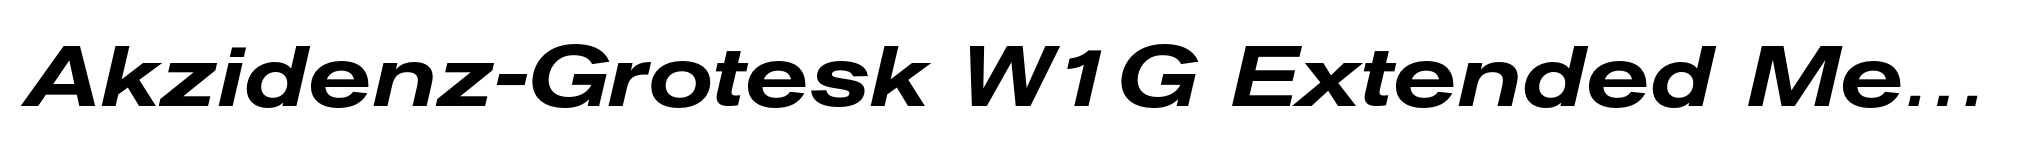 Akzidenz-Grotesk W1G Extended Medium Italic image